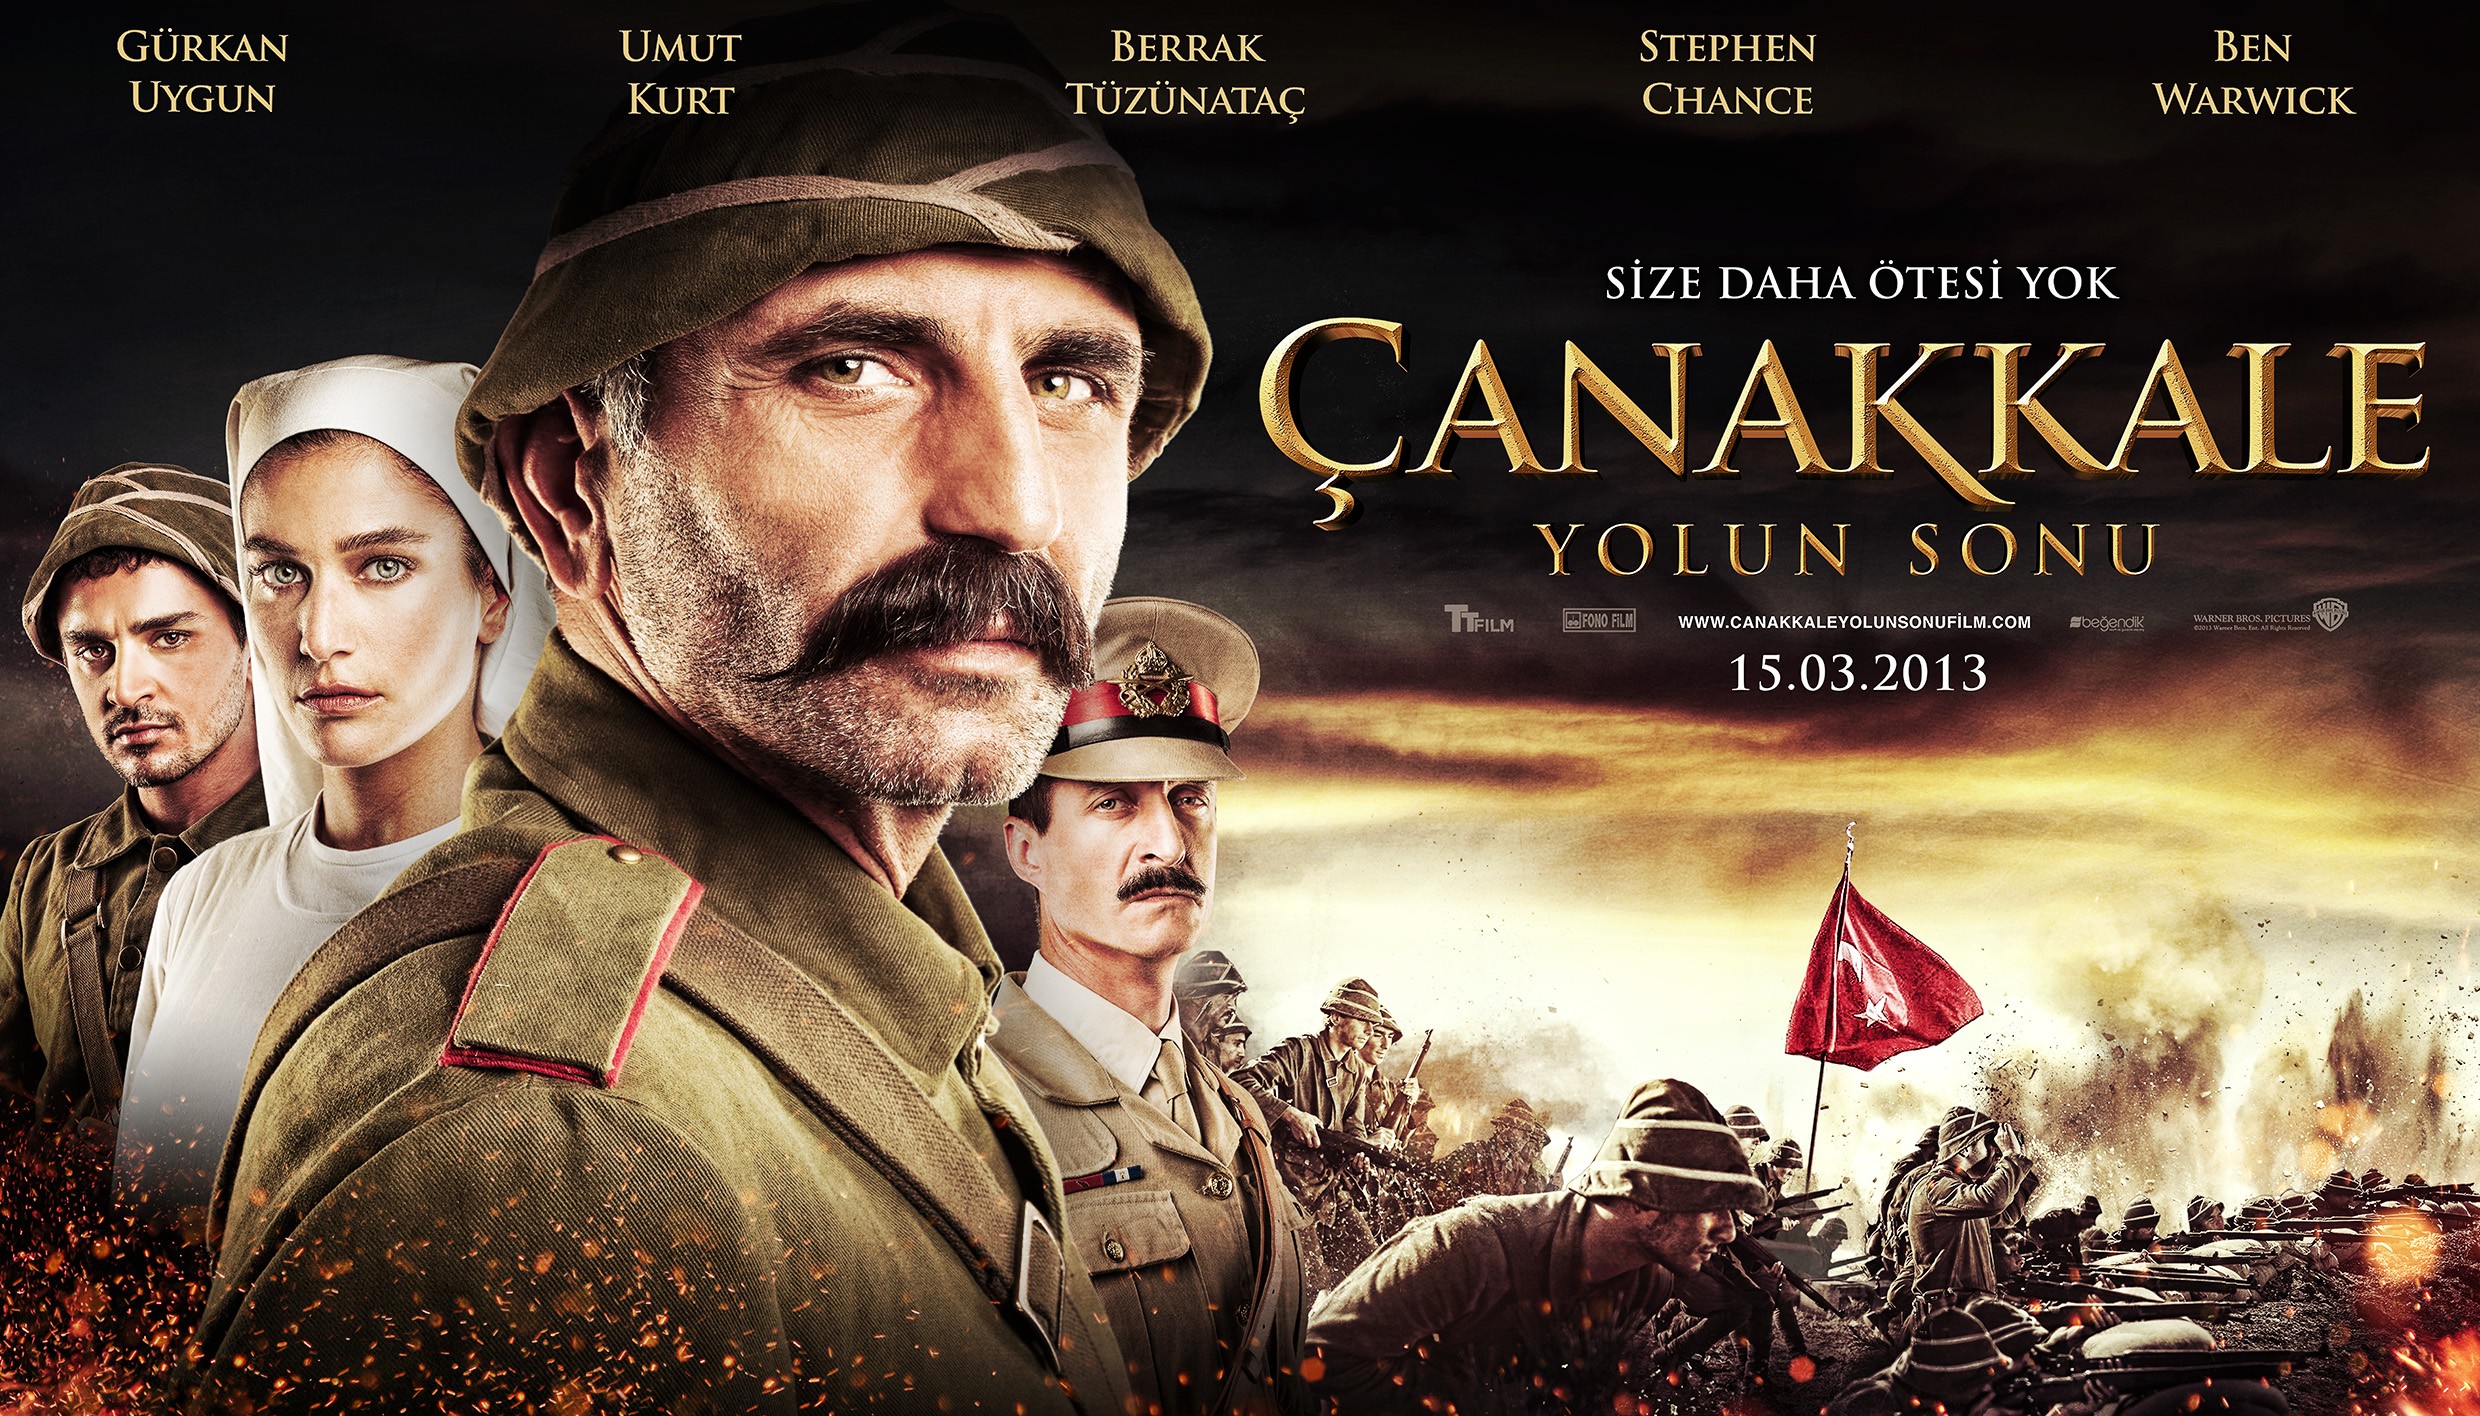 Mega Sized Movie Poster Image for Çanakkale Yolun Sonu (#2 of 2)